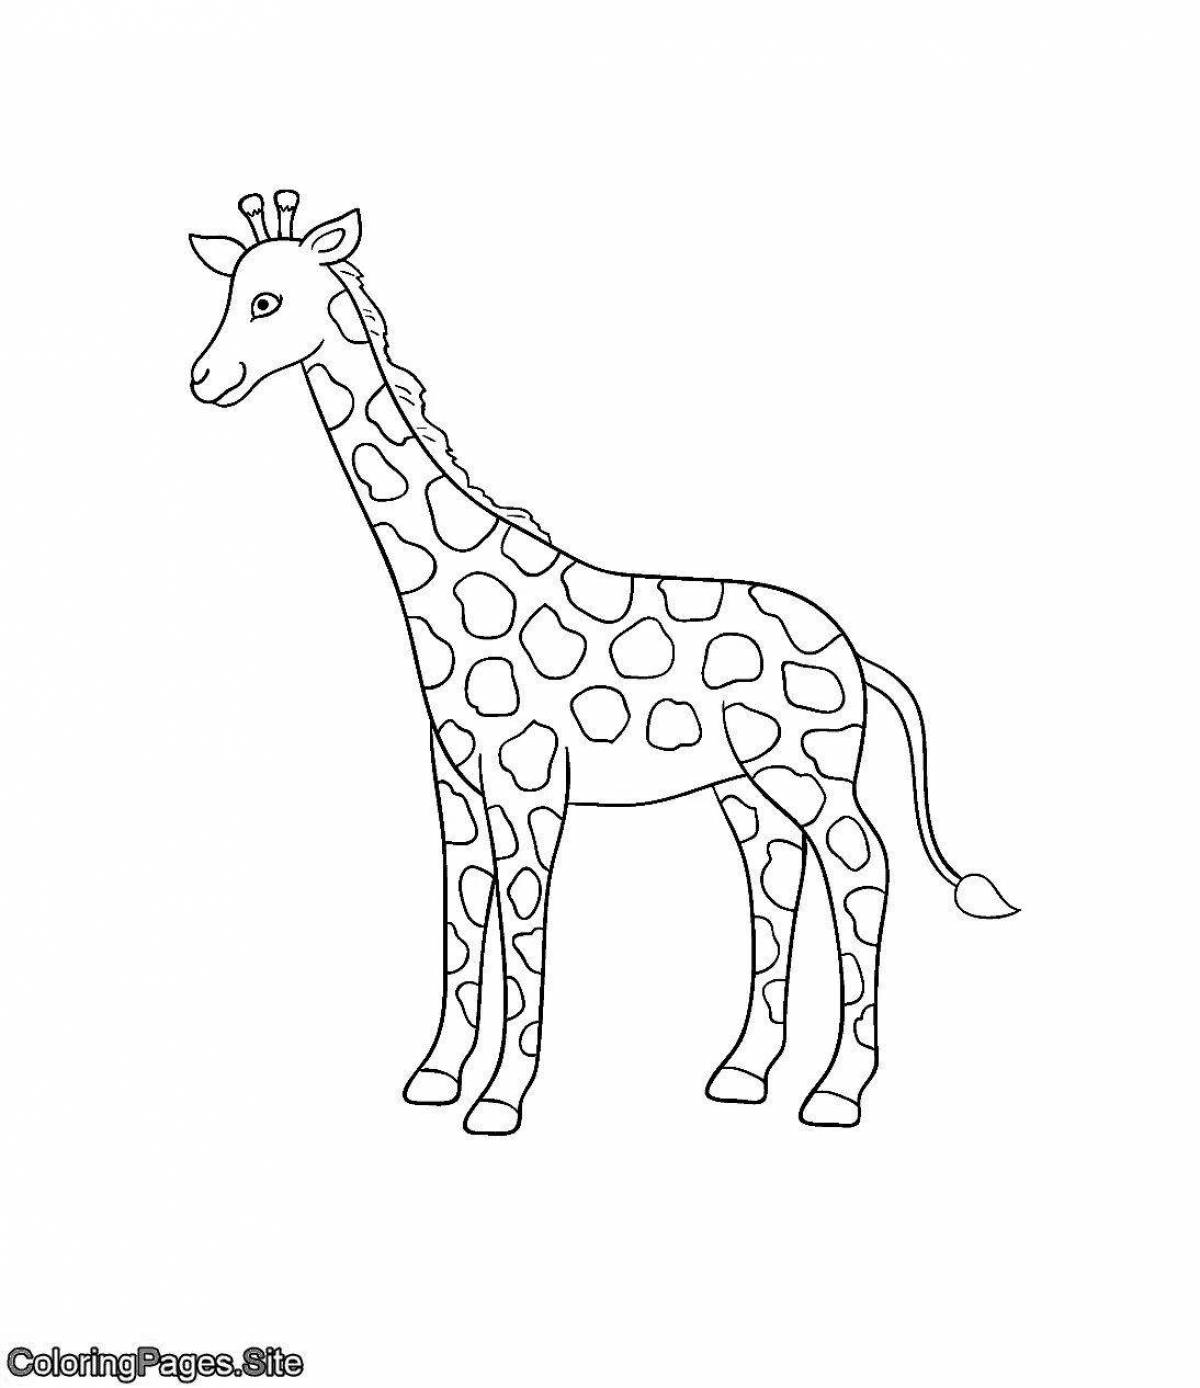 Funny giraffe drawing for kids